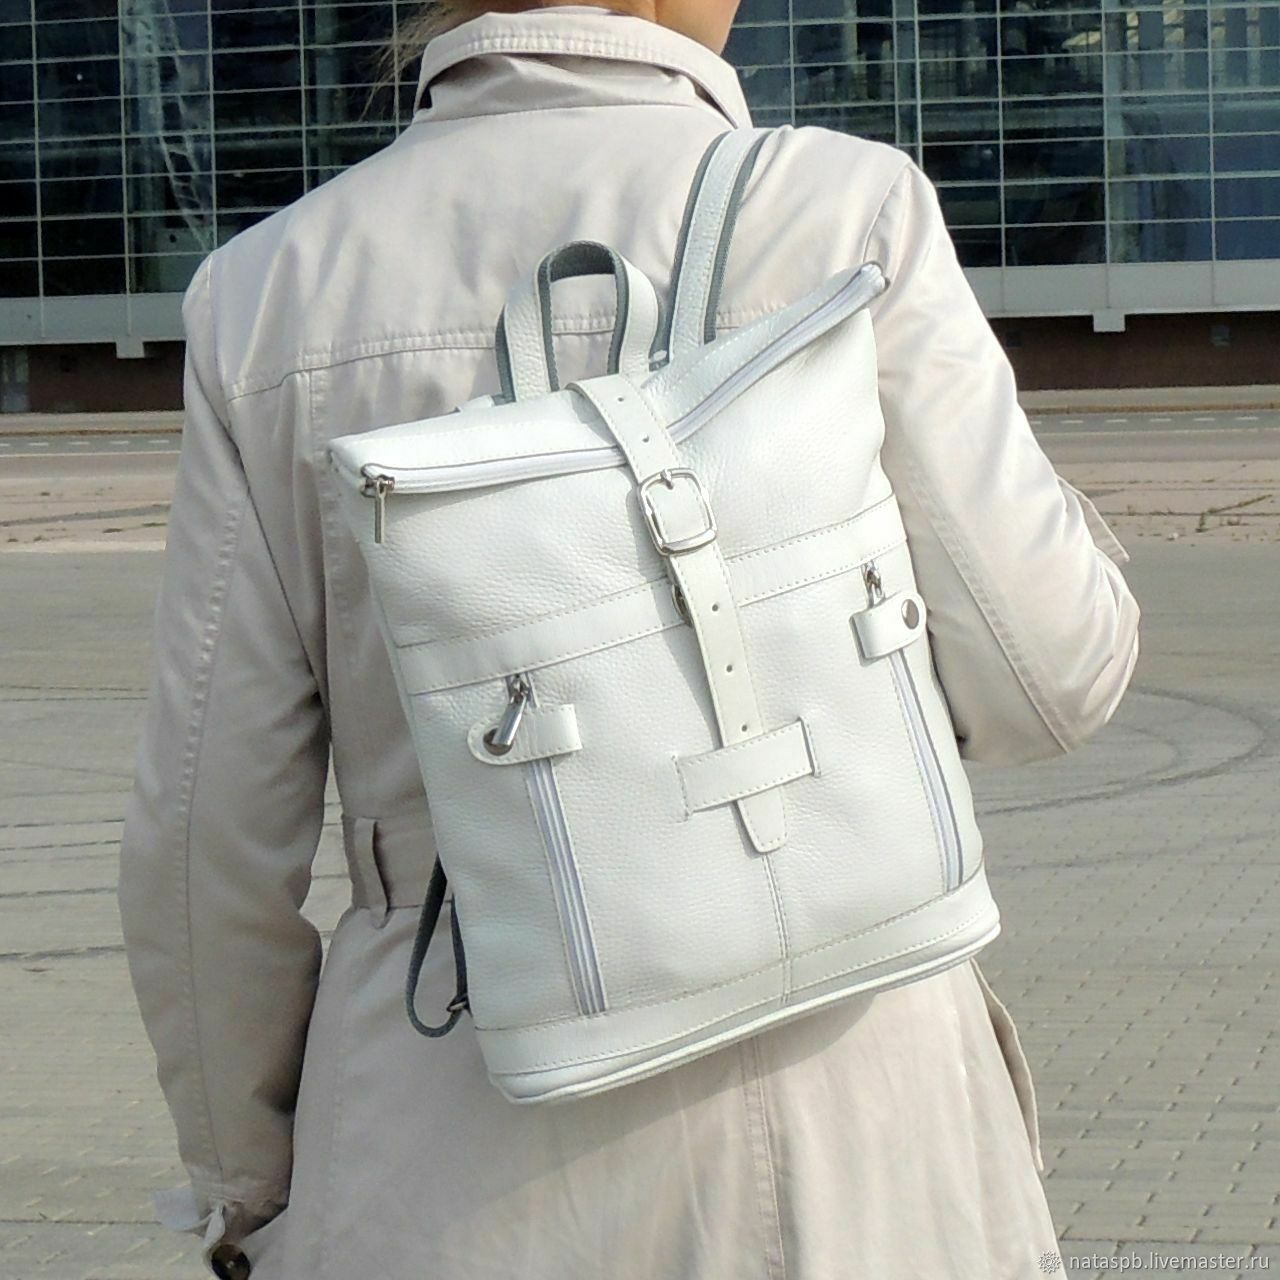  Backpack Bag Leather Female White Selfie Mod.SR56-141, Backpacks, St. Petersburg,  Фото №1